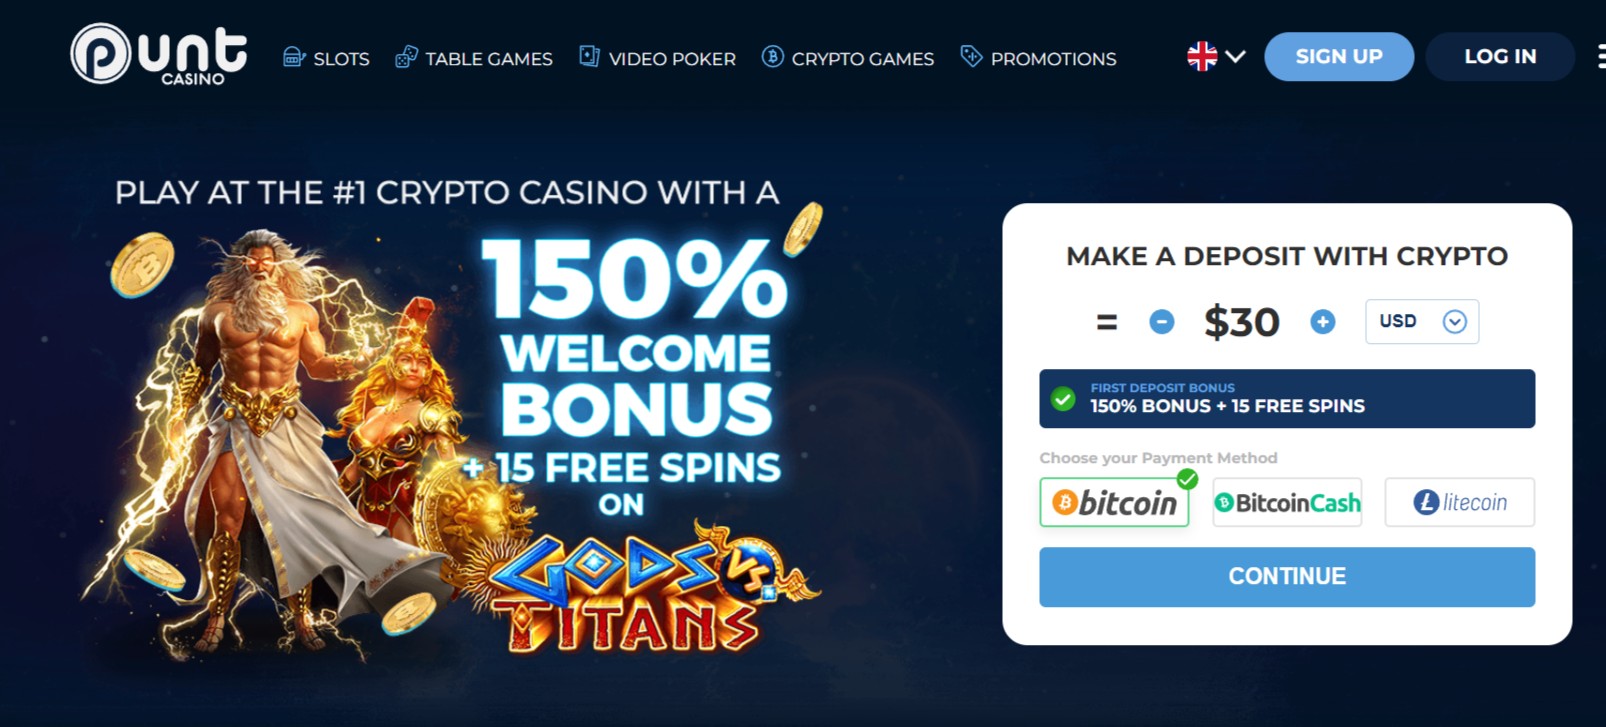 punt casino website homepage screenshot